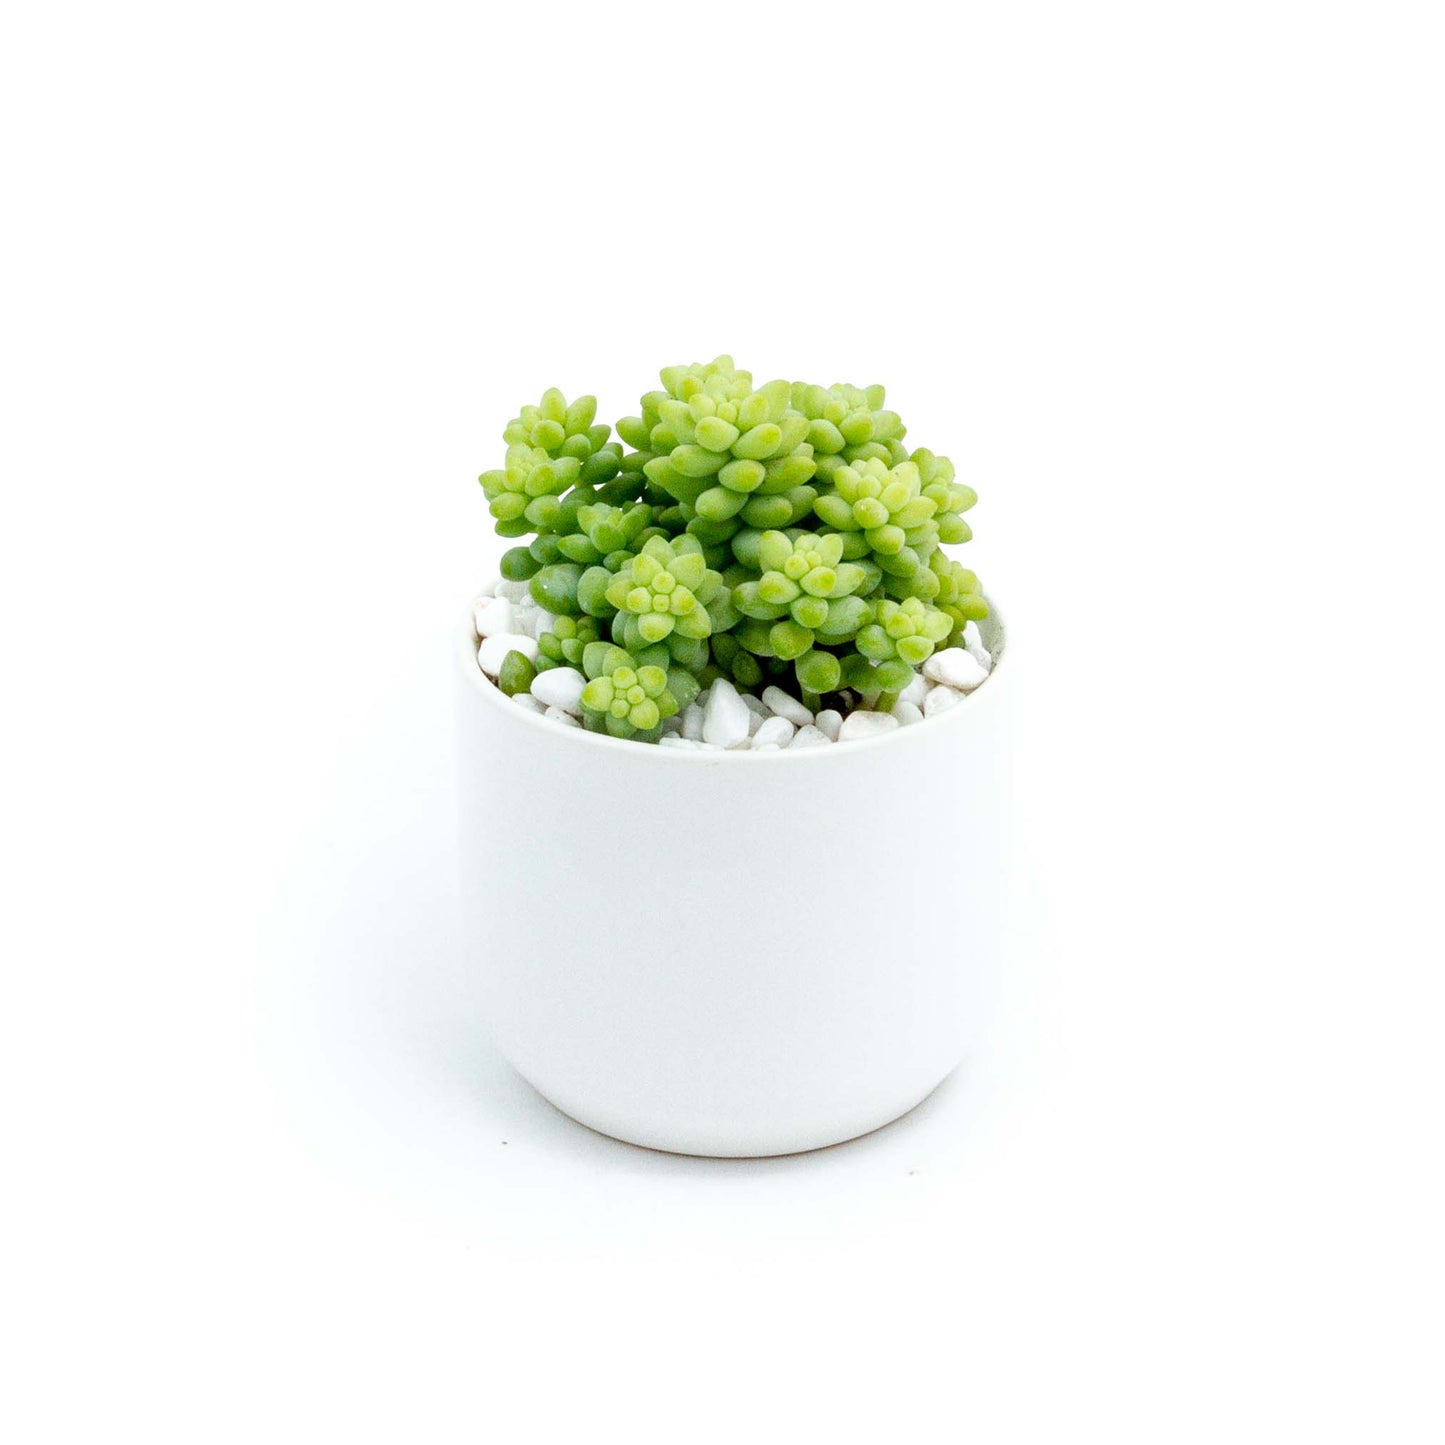 Succulent Plants in Small Ceramic Pots 2 (Multiple Pot & Plant Combinations)